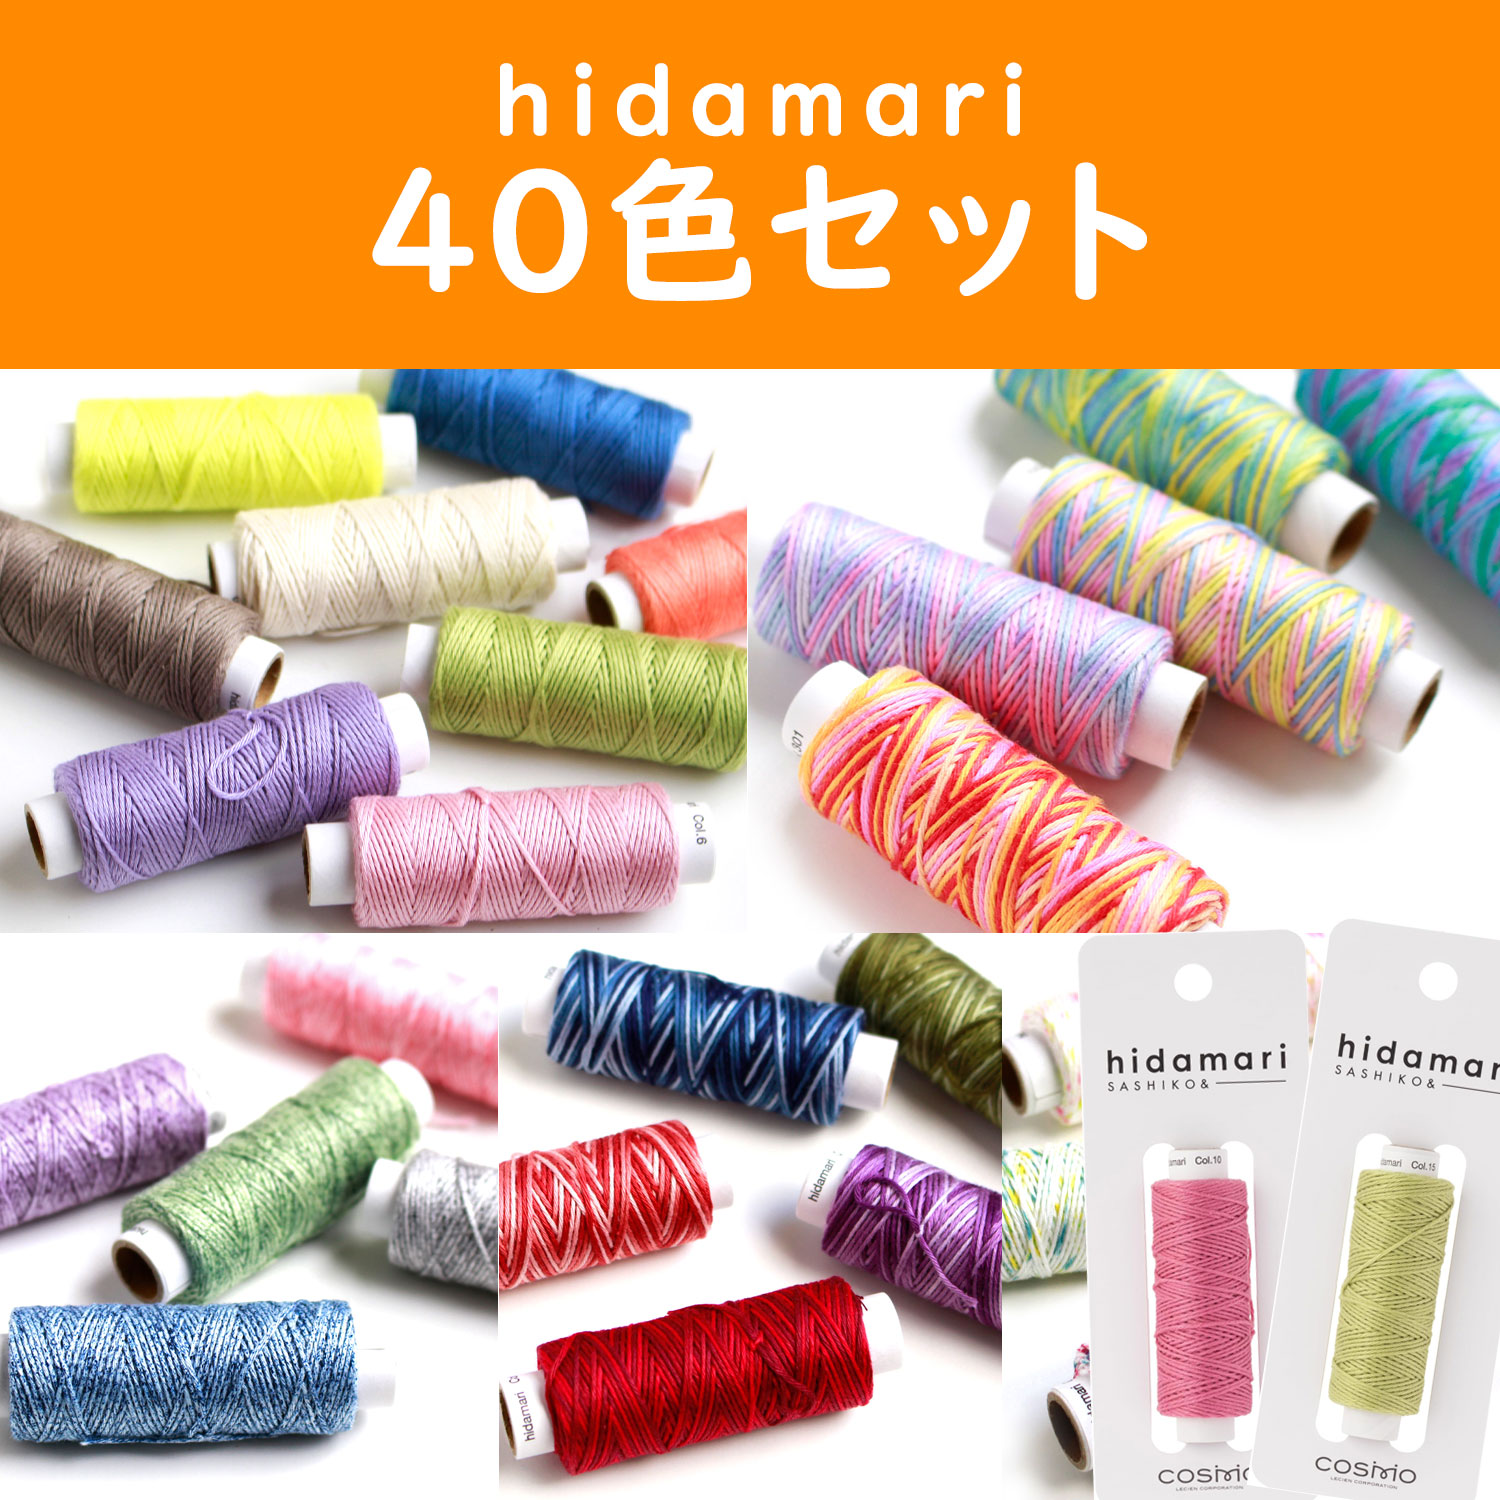 CS12230-40SET コスモ 刺し子糸 全40色セット - hidamari - (セット)